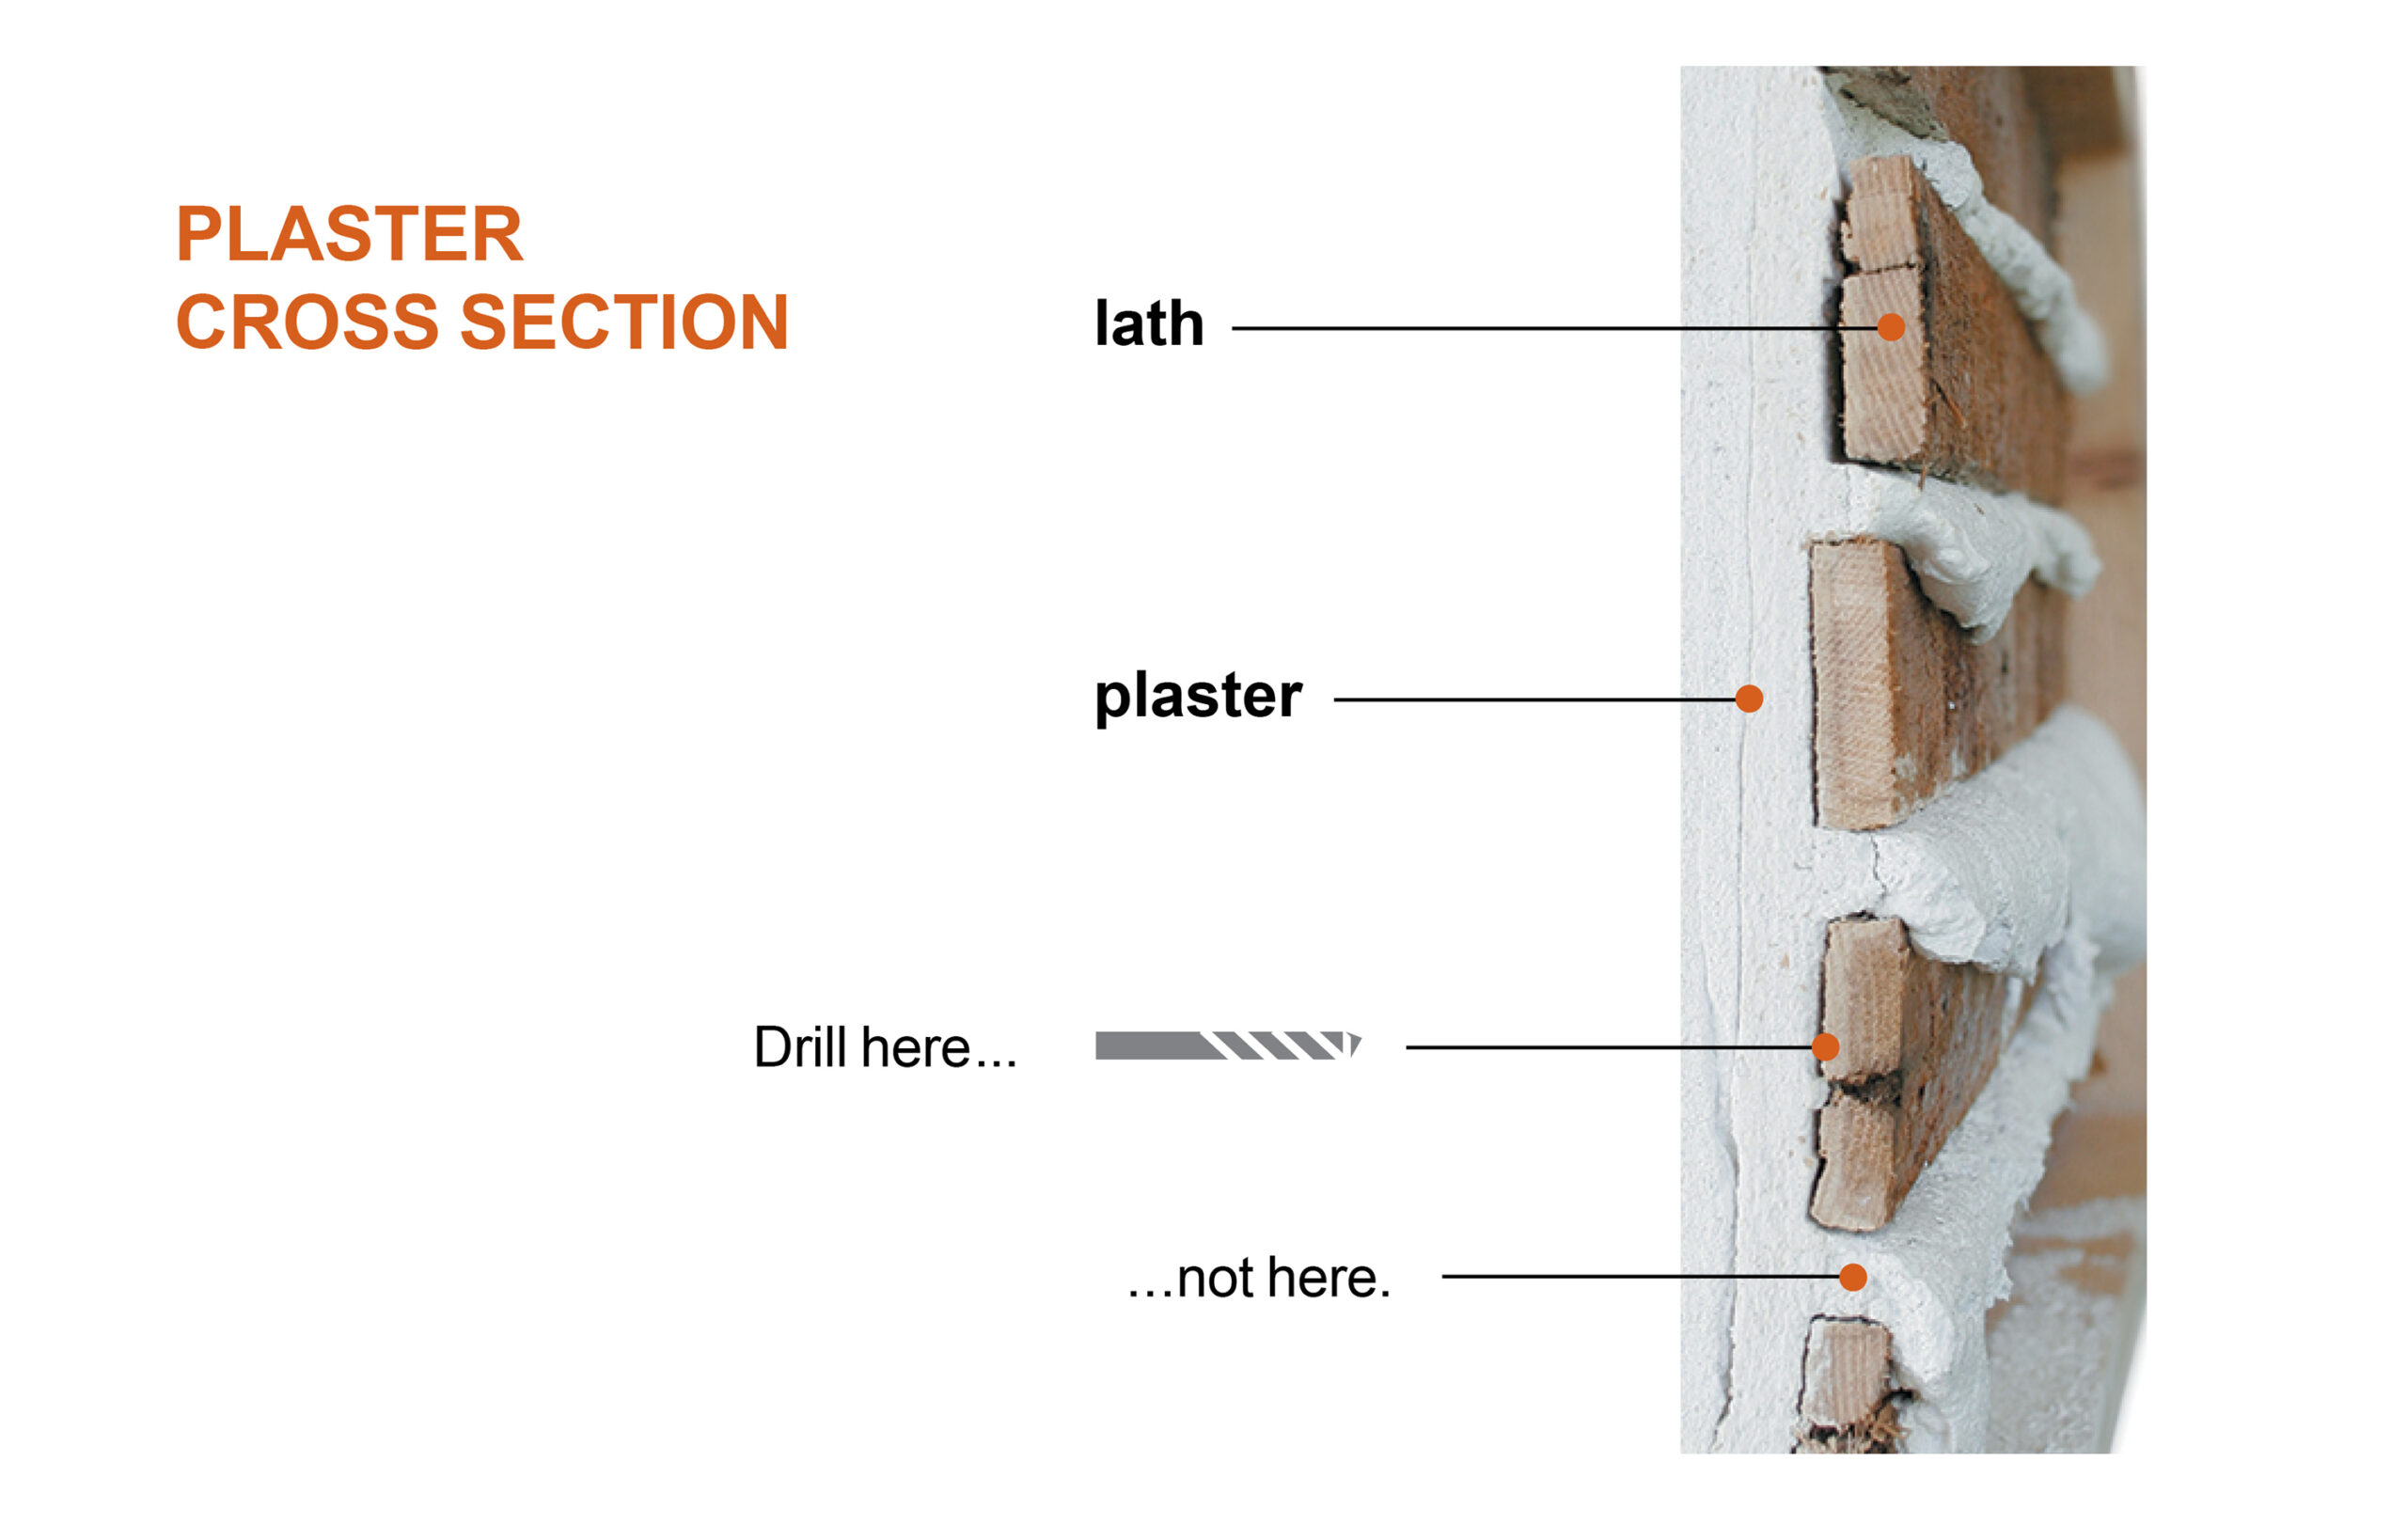 repairing railing in lath and plaster walls